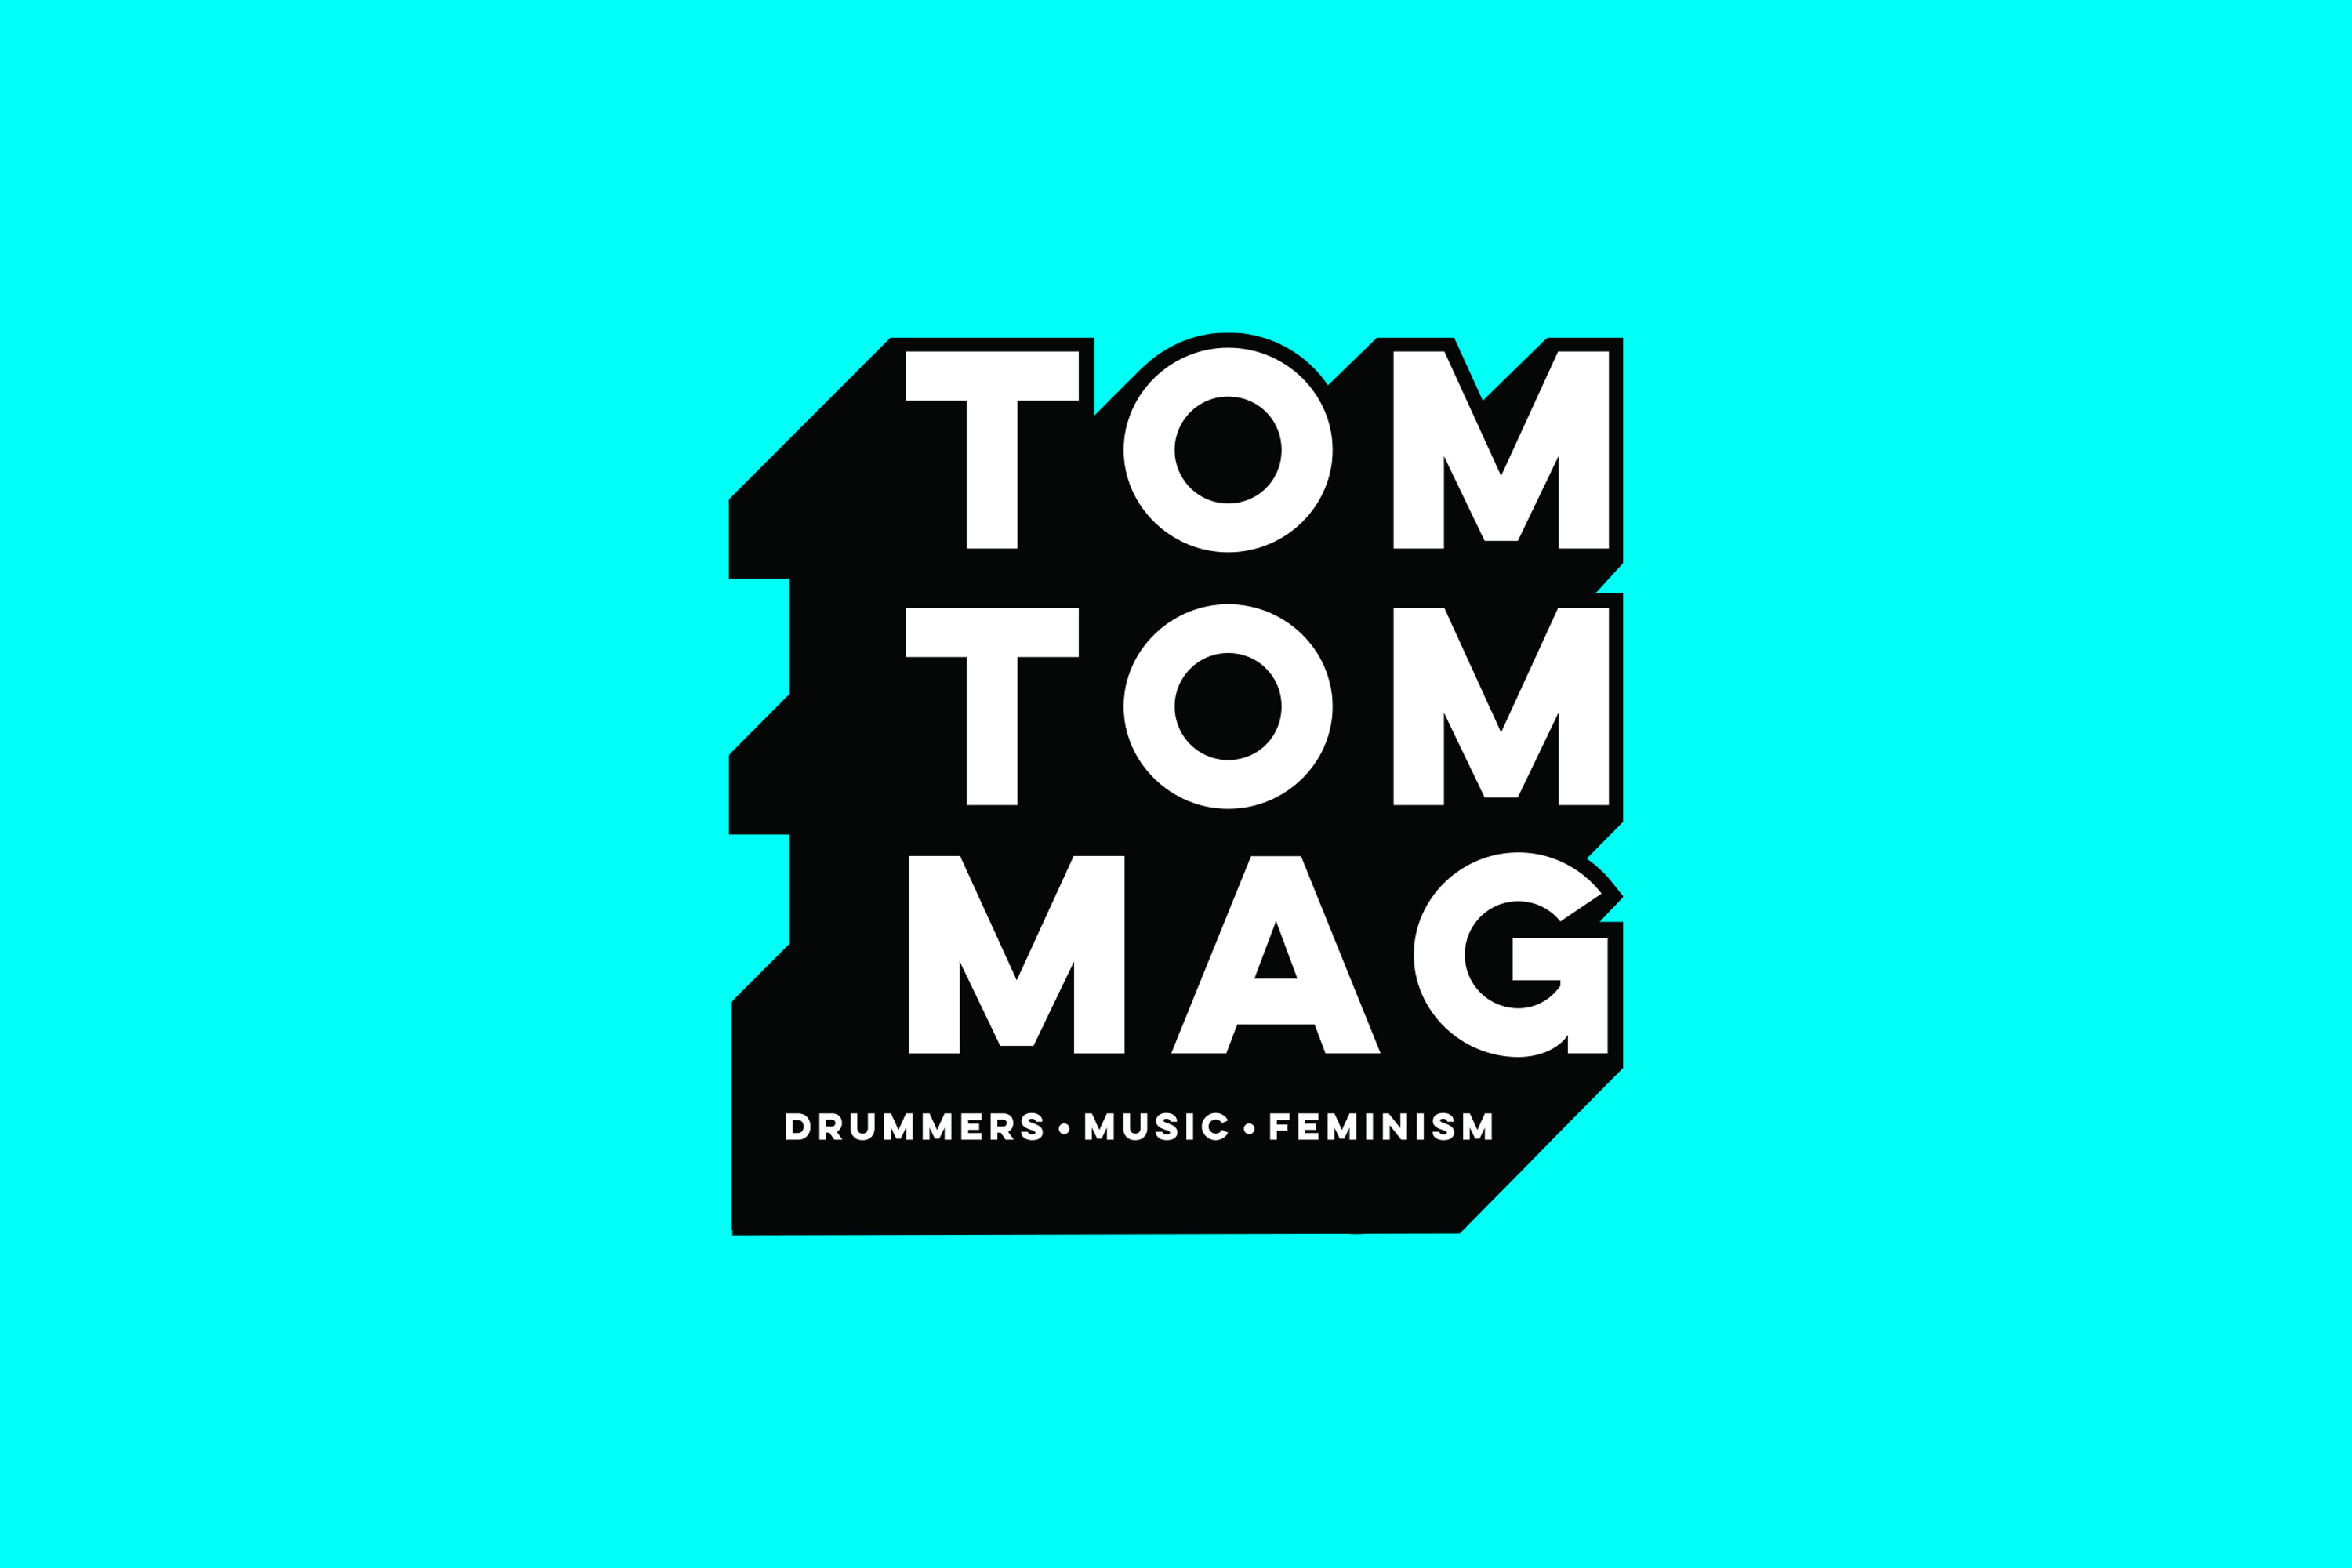 Tom Tom Magazine Branding